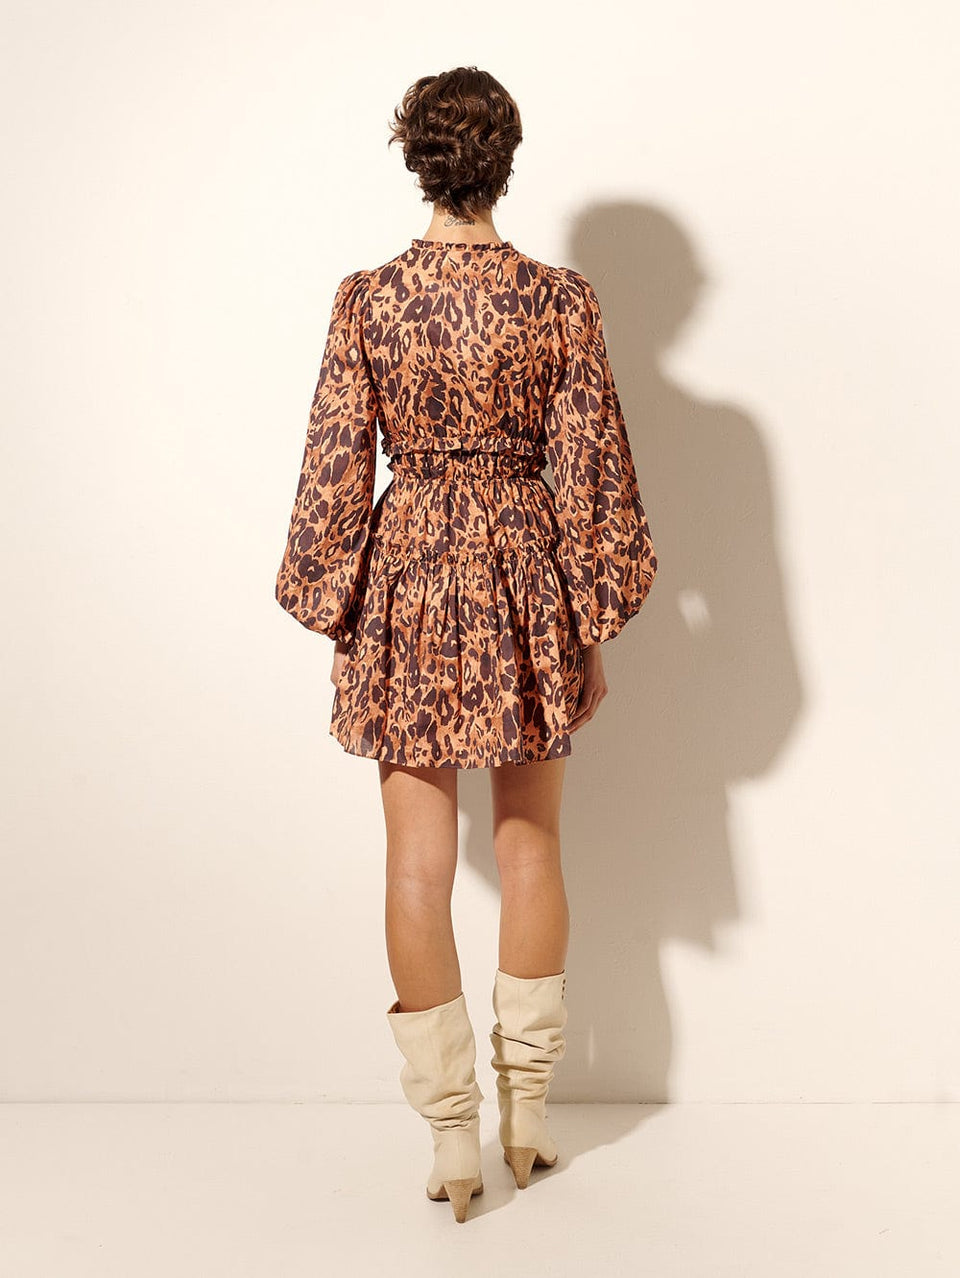 Madison Mini Dress KIVARI | Model wears orange and brown leopard mini dress back view